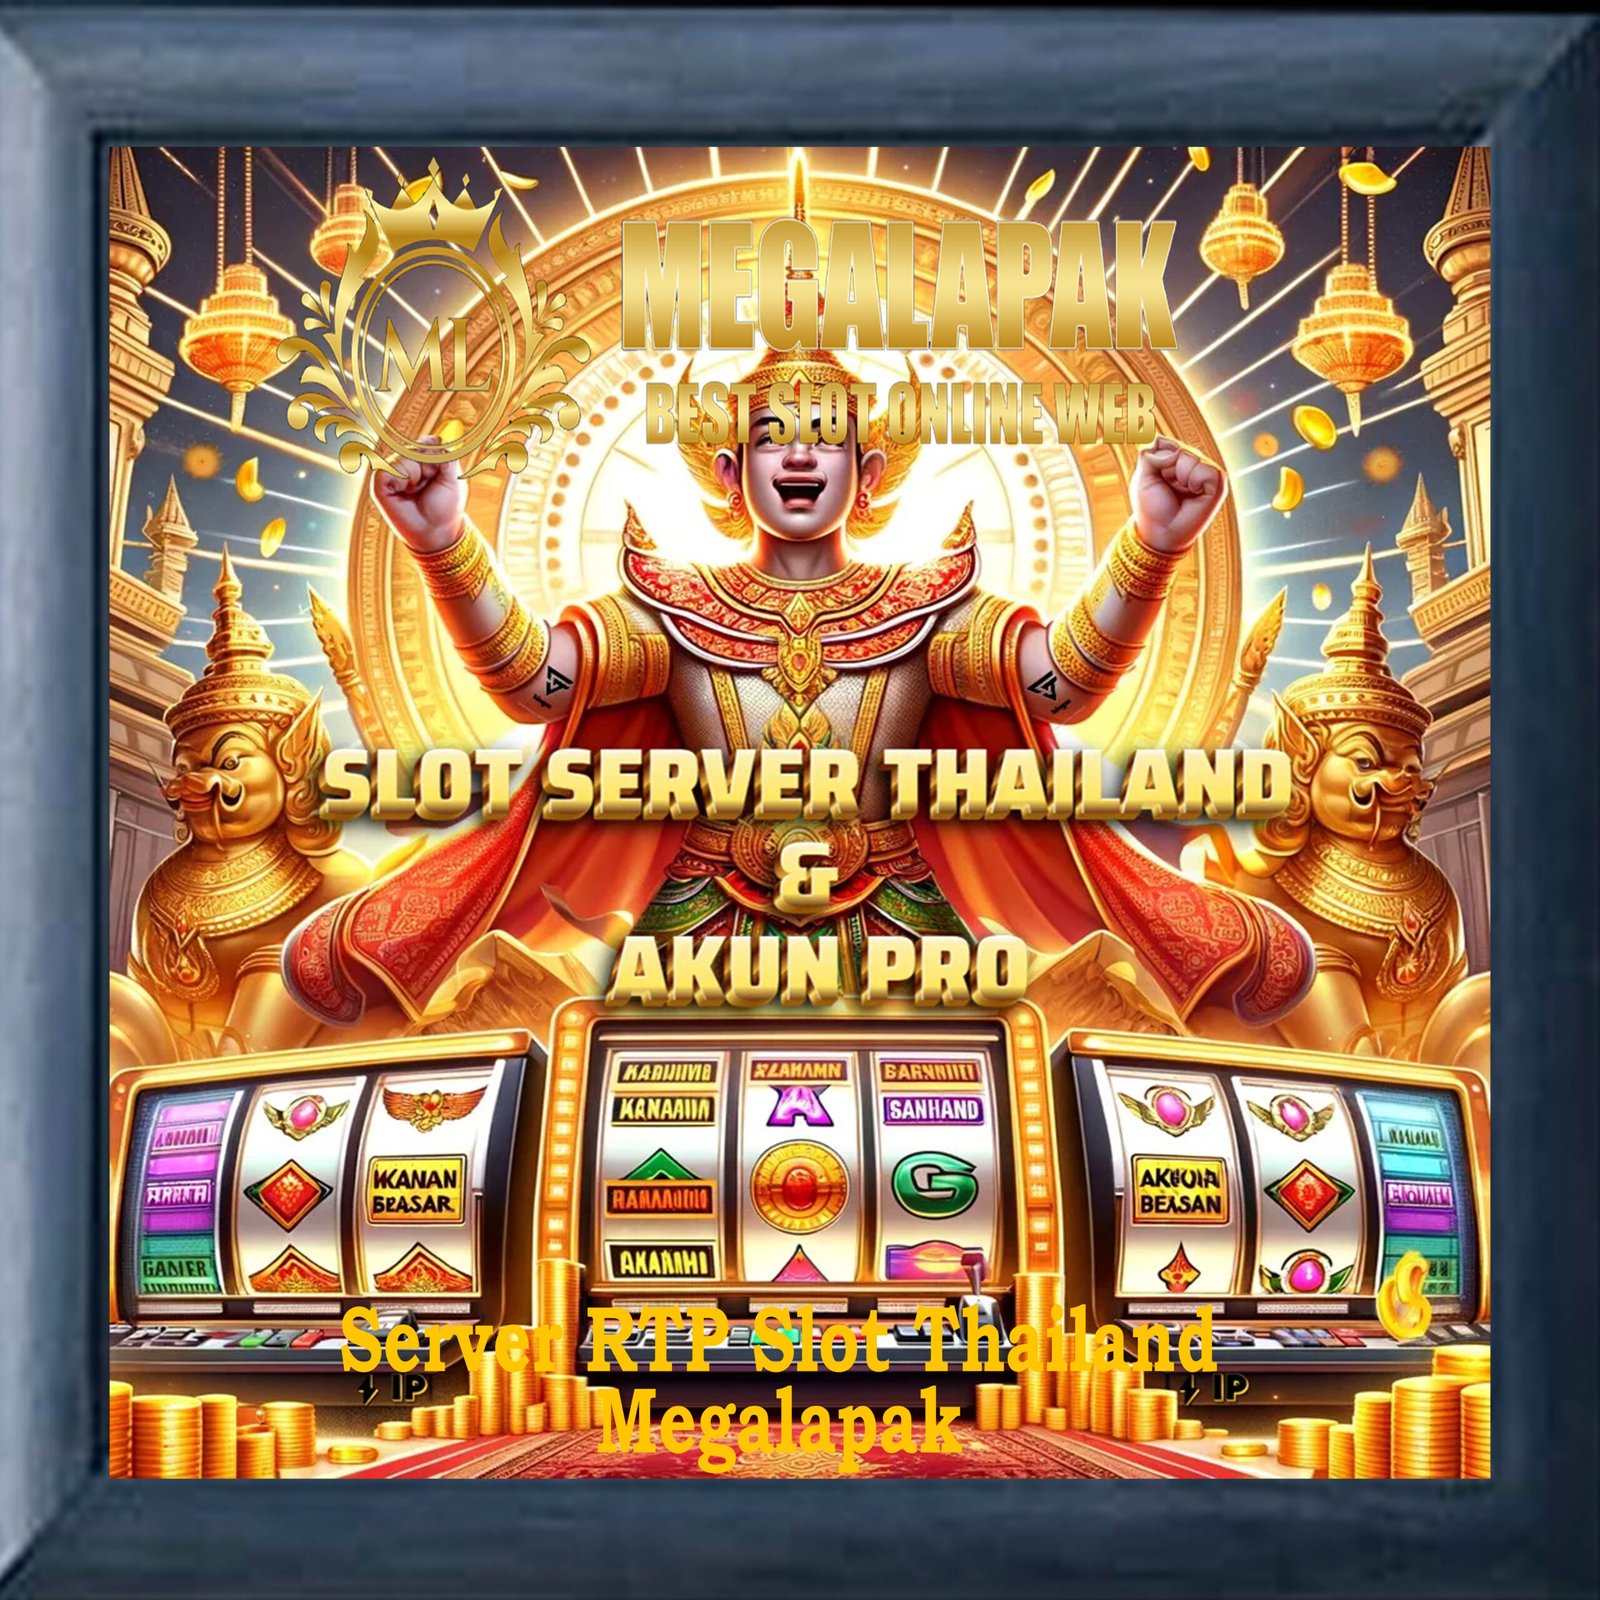 Server RTP Slot Thailand Megalapak